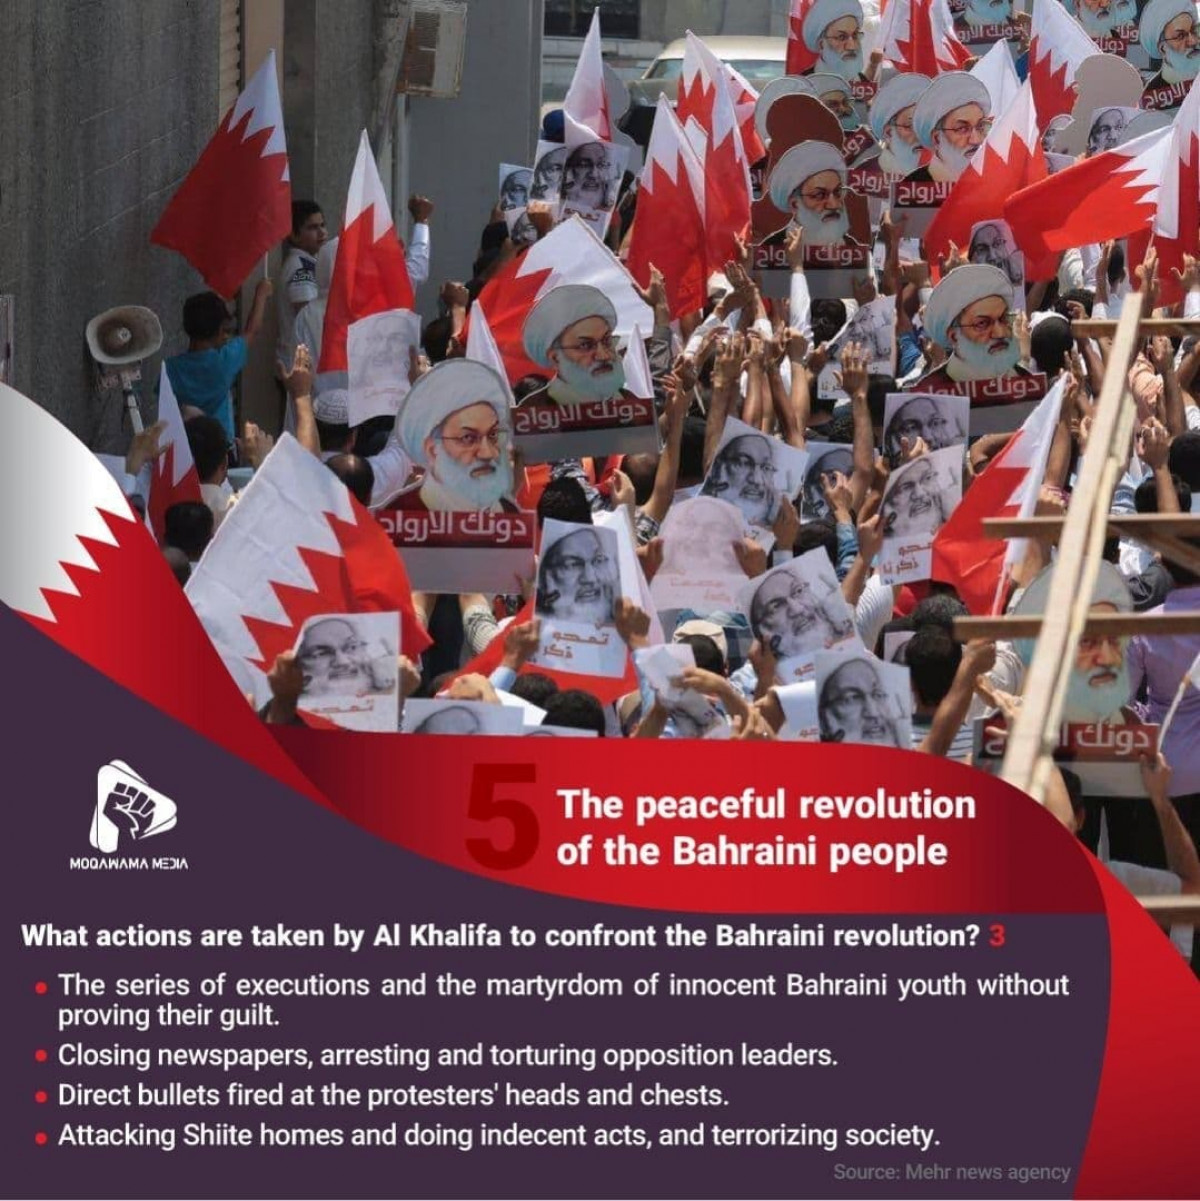 The peaceful revolution of the Bahraini people2